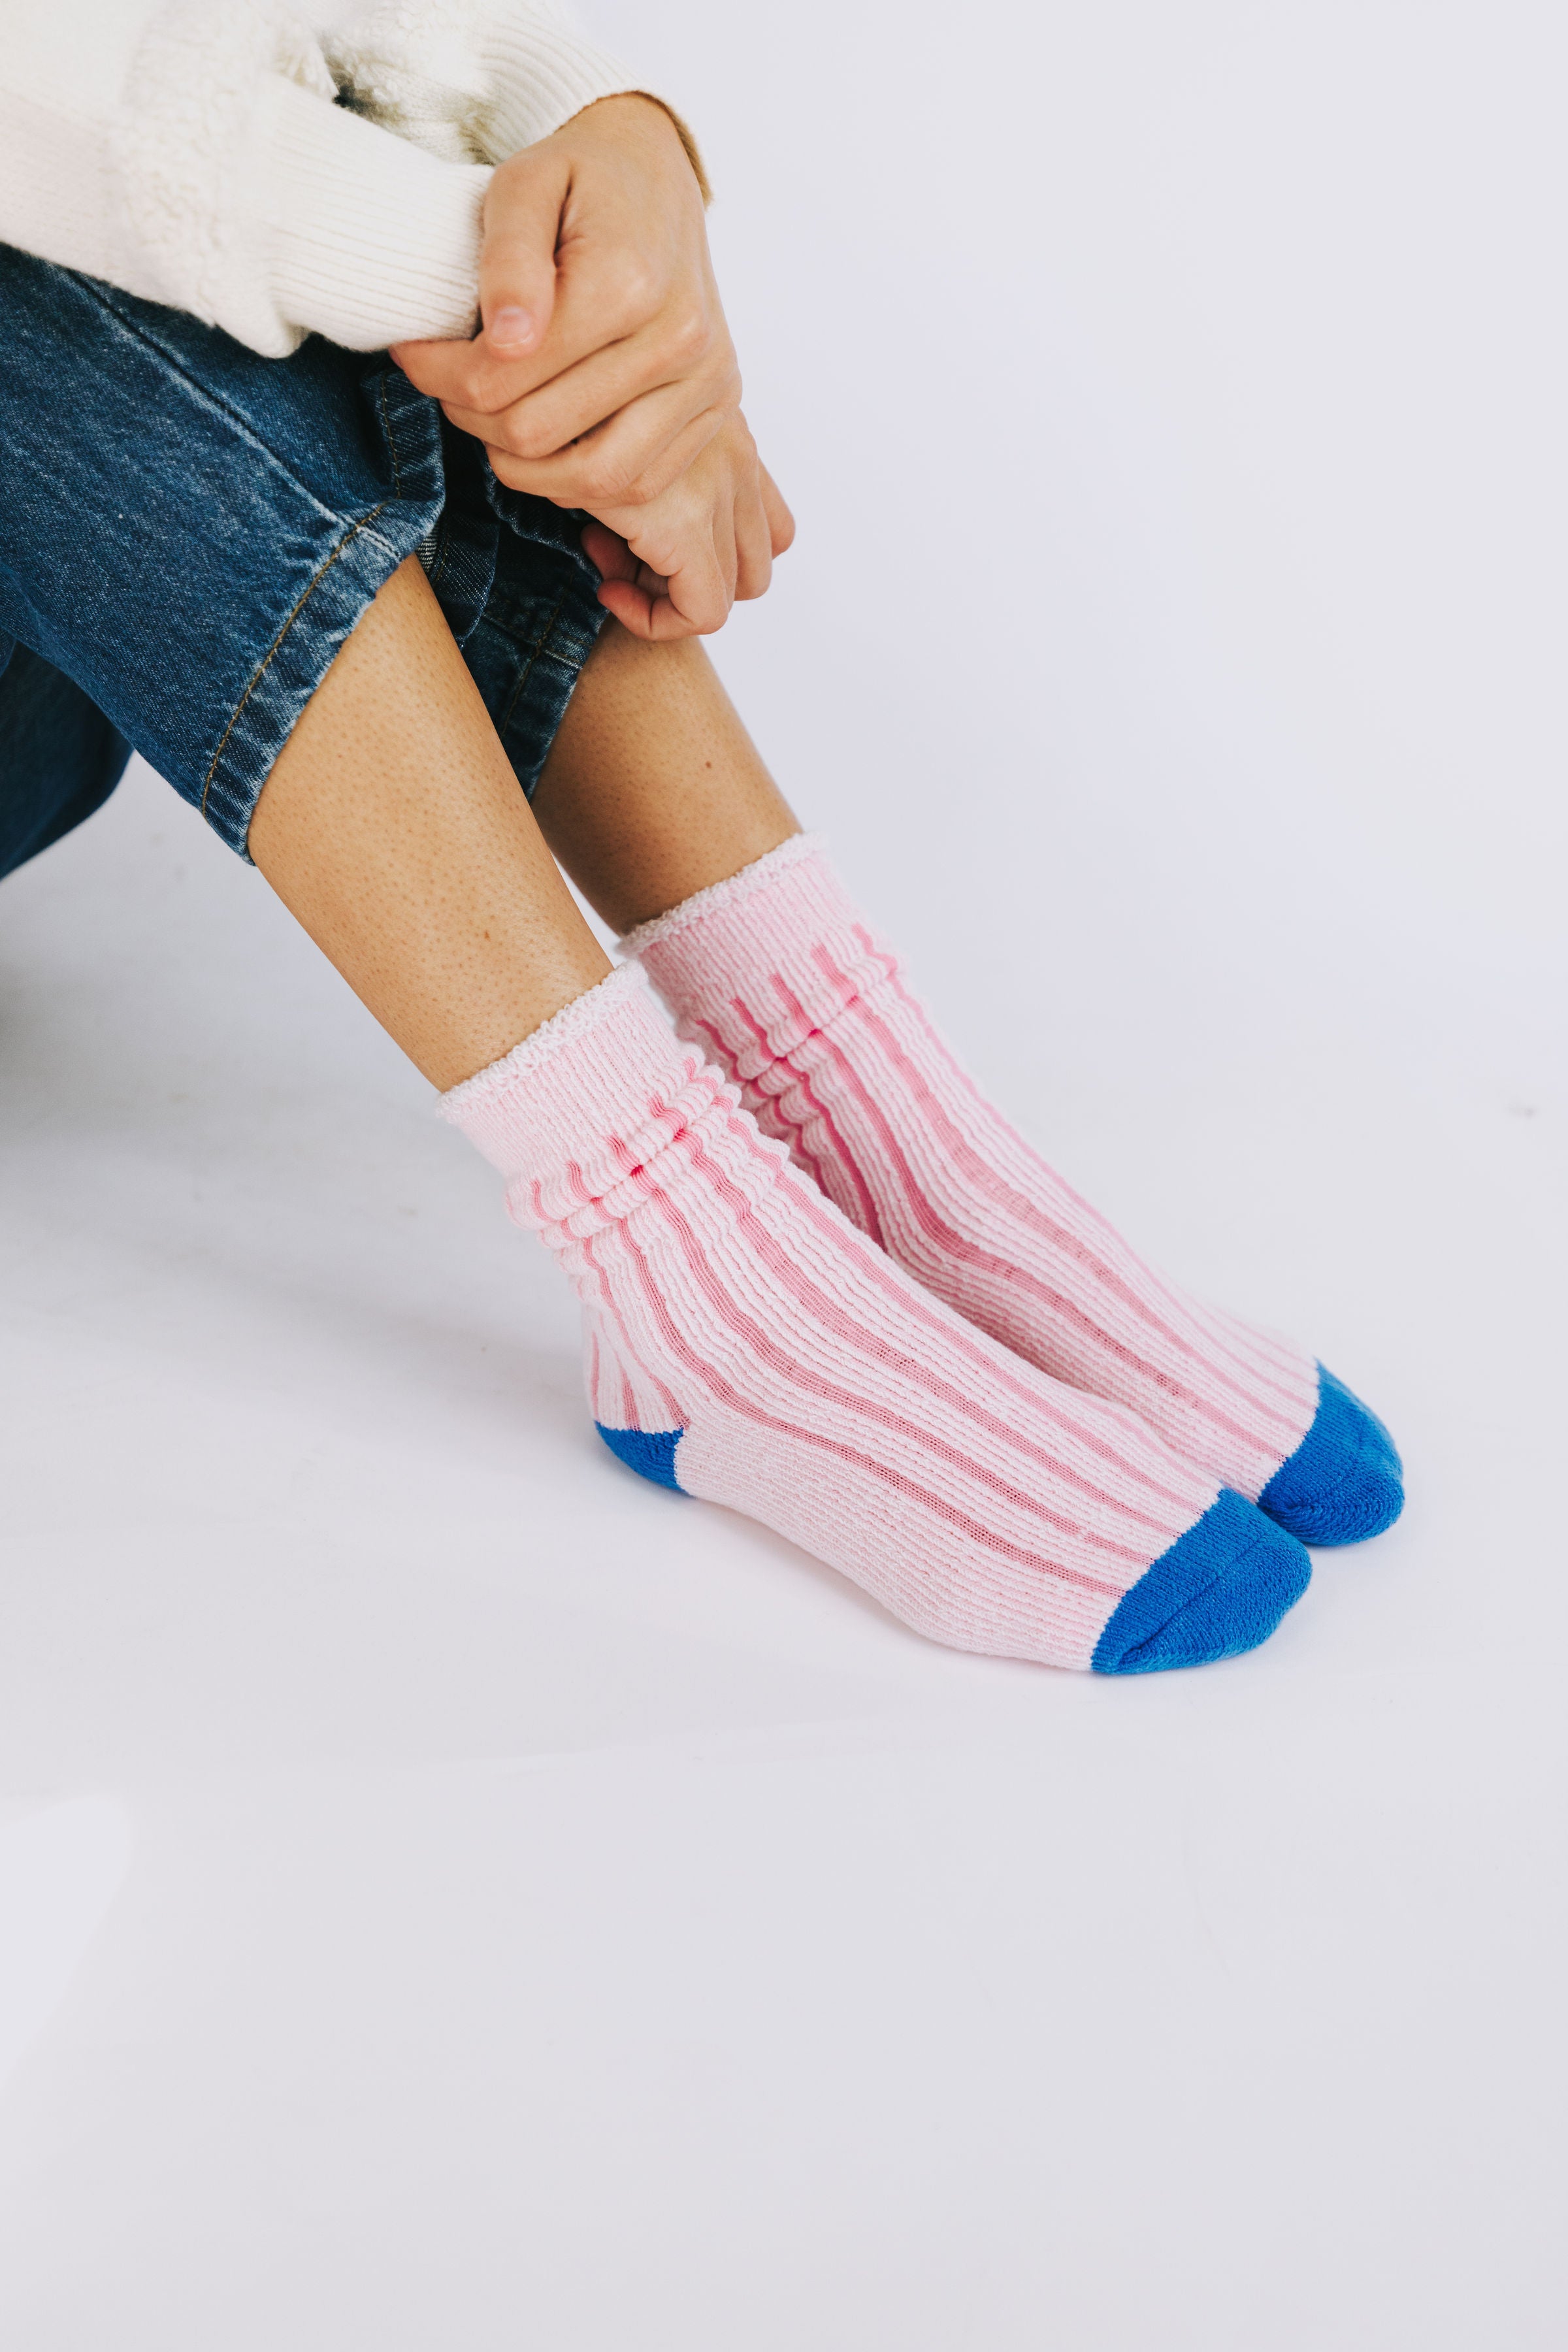 FREE PEOPLE - Plush Inside Out Crew Socks